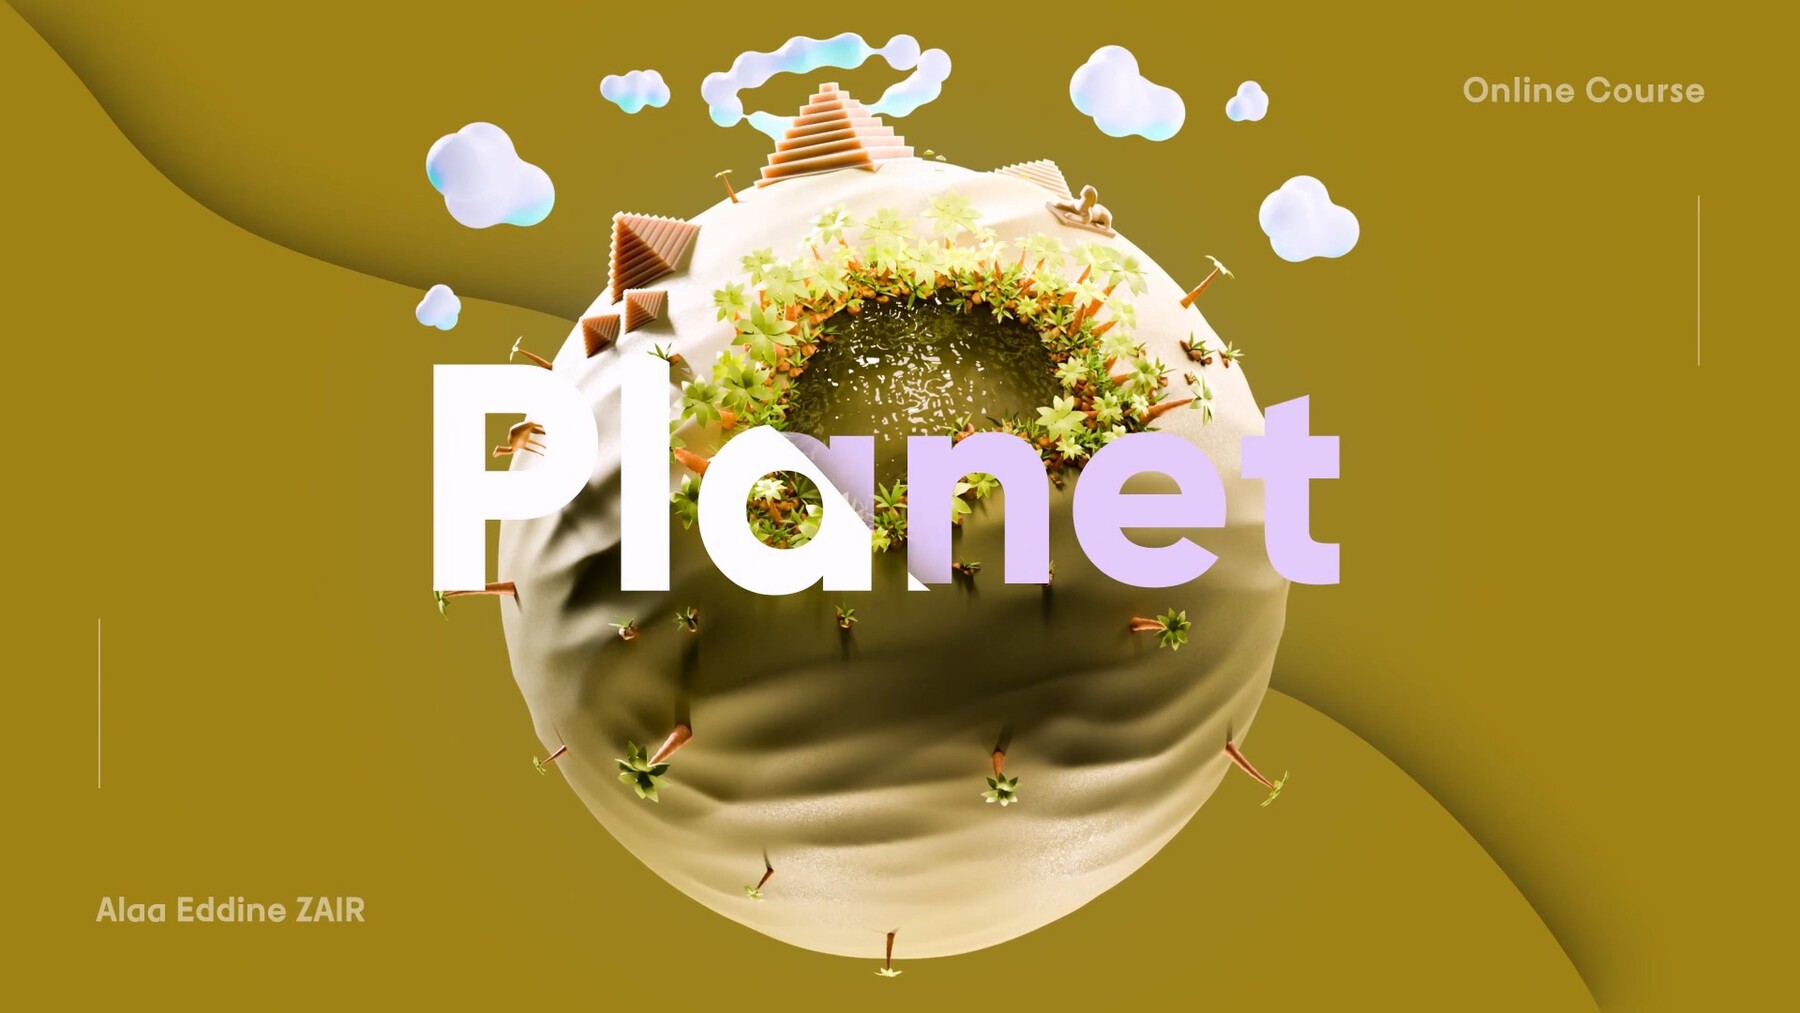 ArtStation - Blender Course - Your First Miniature Planet | Tutorials